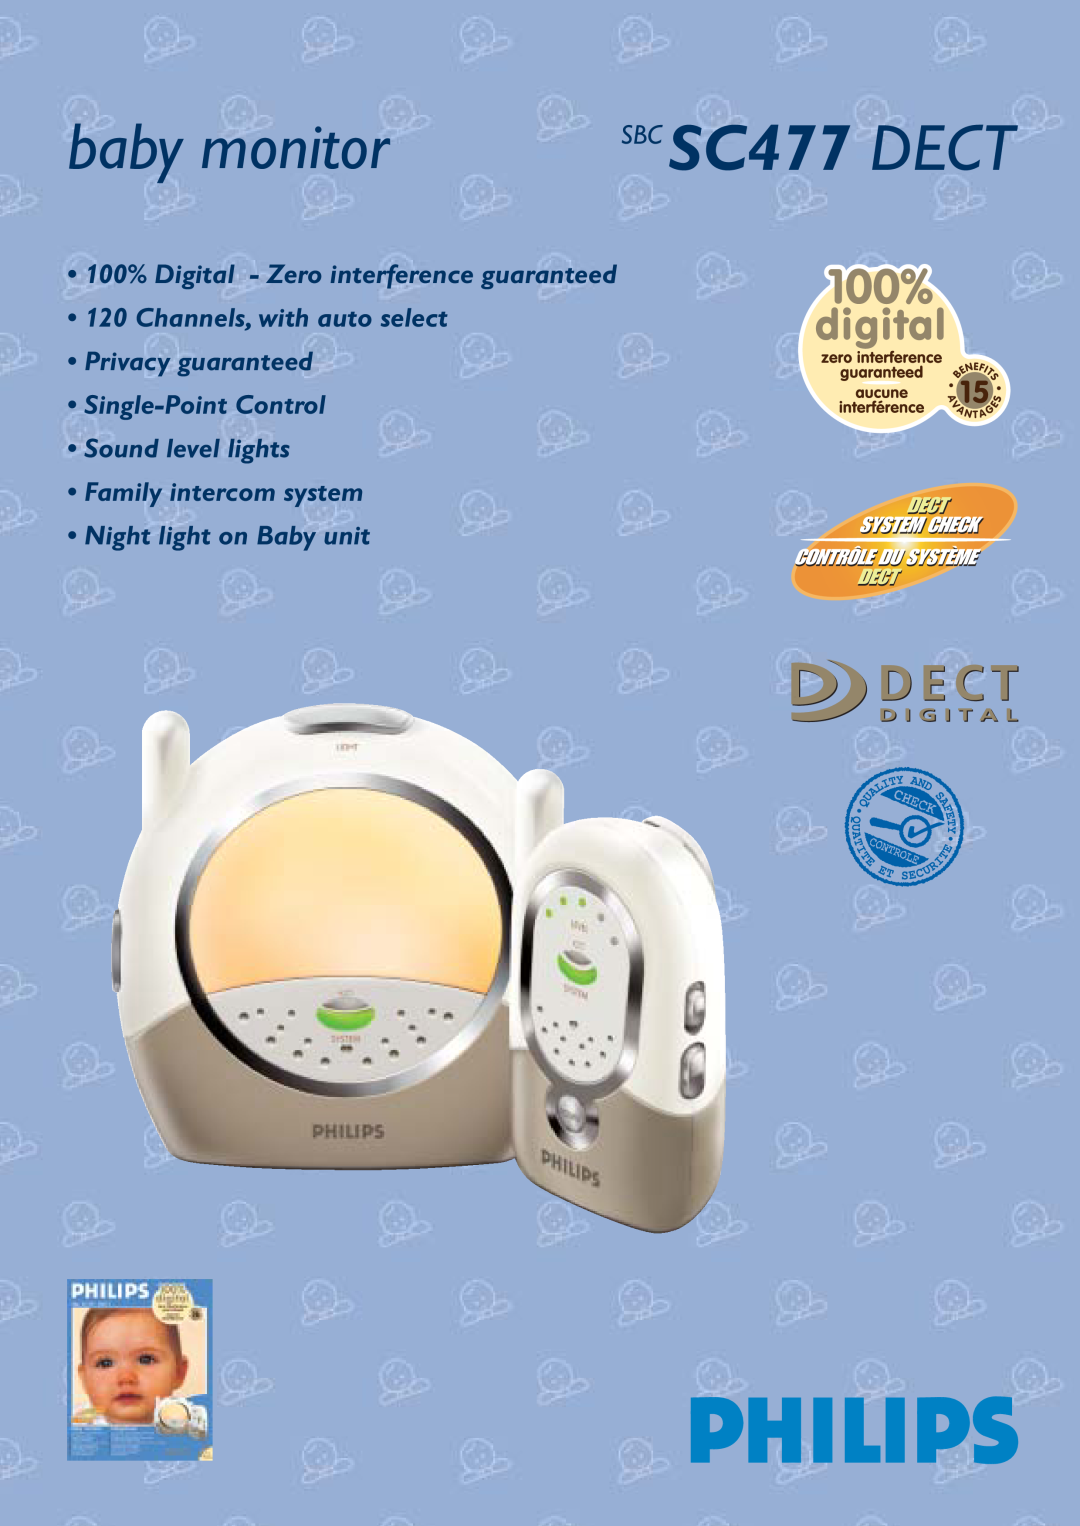 Philips manual baby monitor, SBC SC477 DECT, 100% Digital - Zero interference guaranteed, Night light on Baby unit 